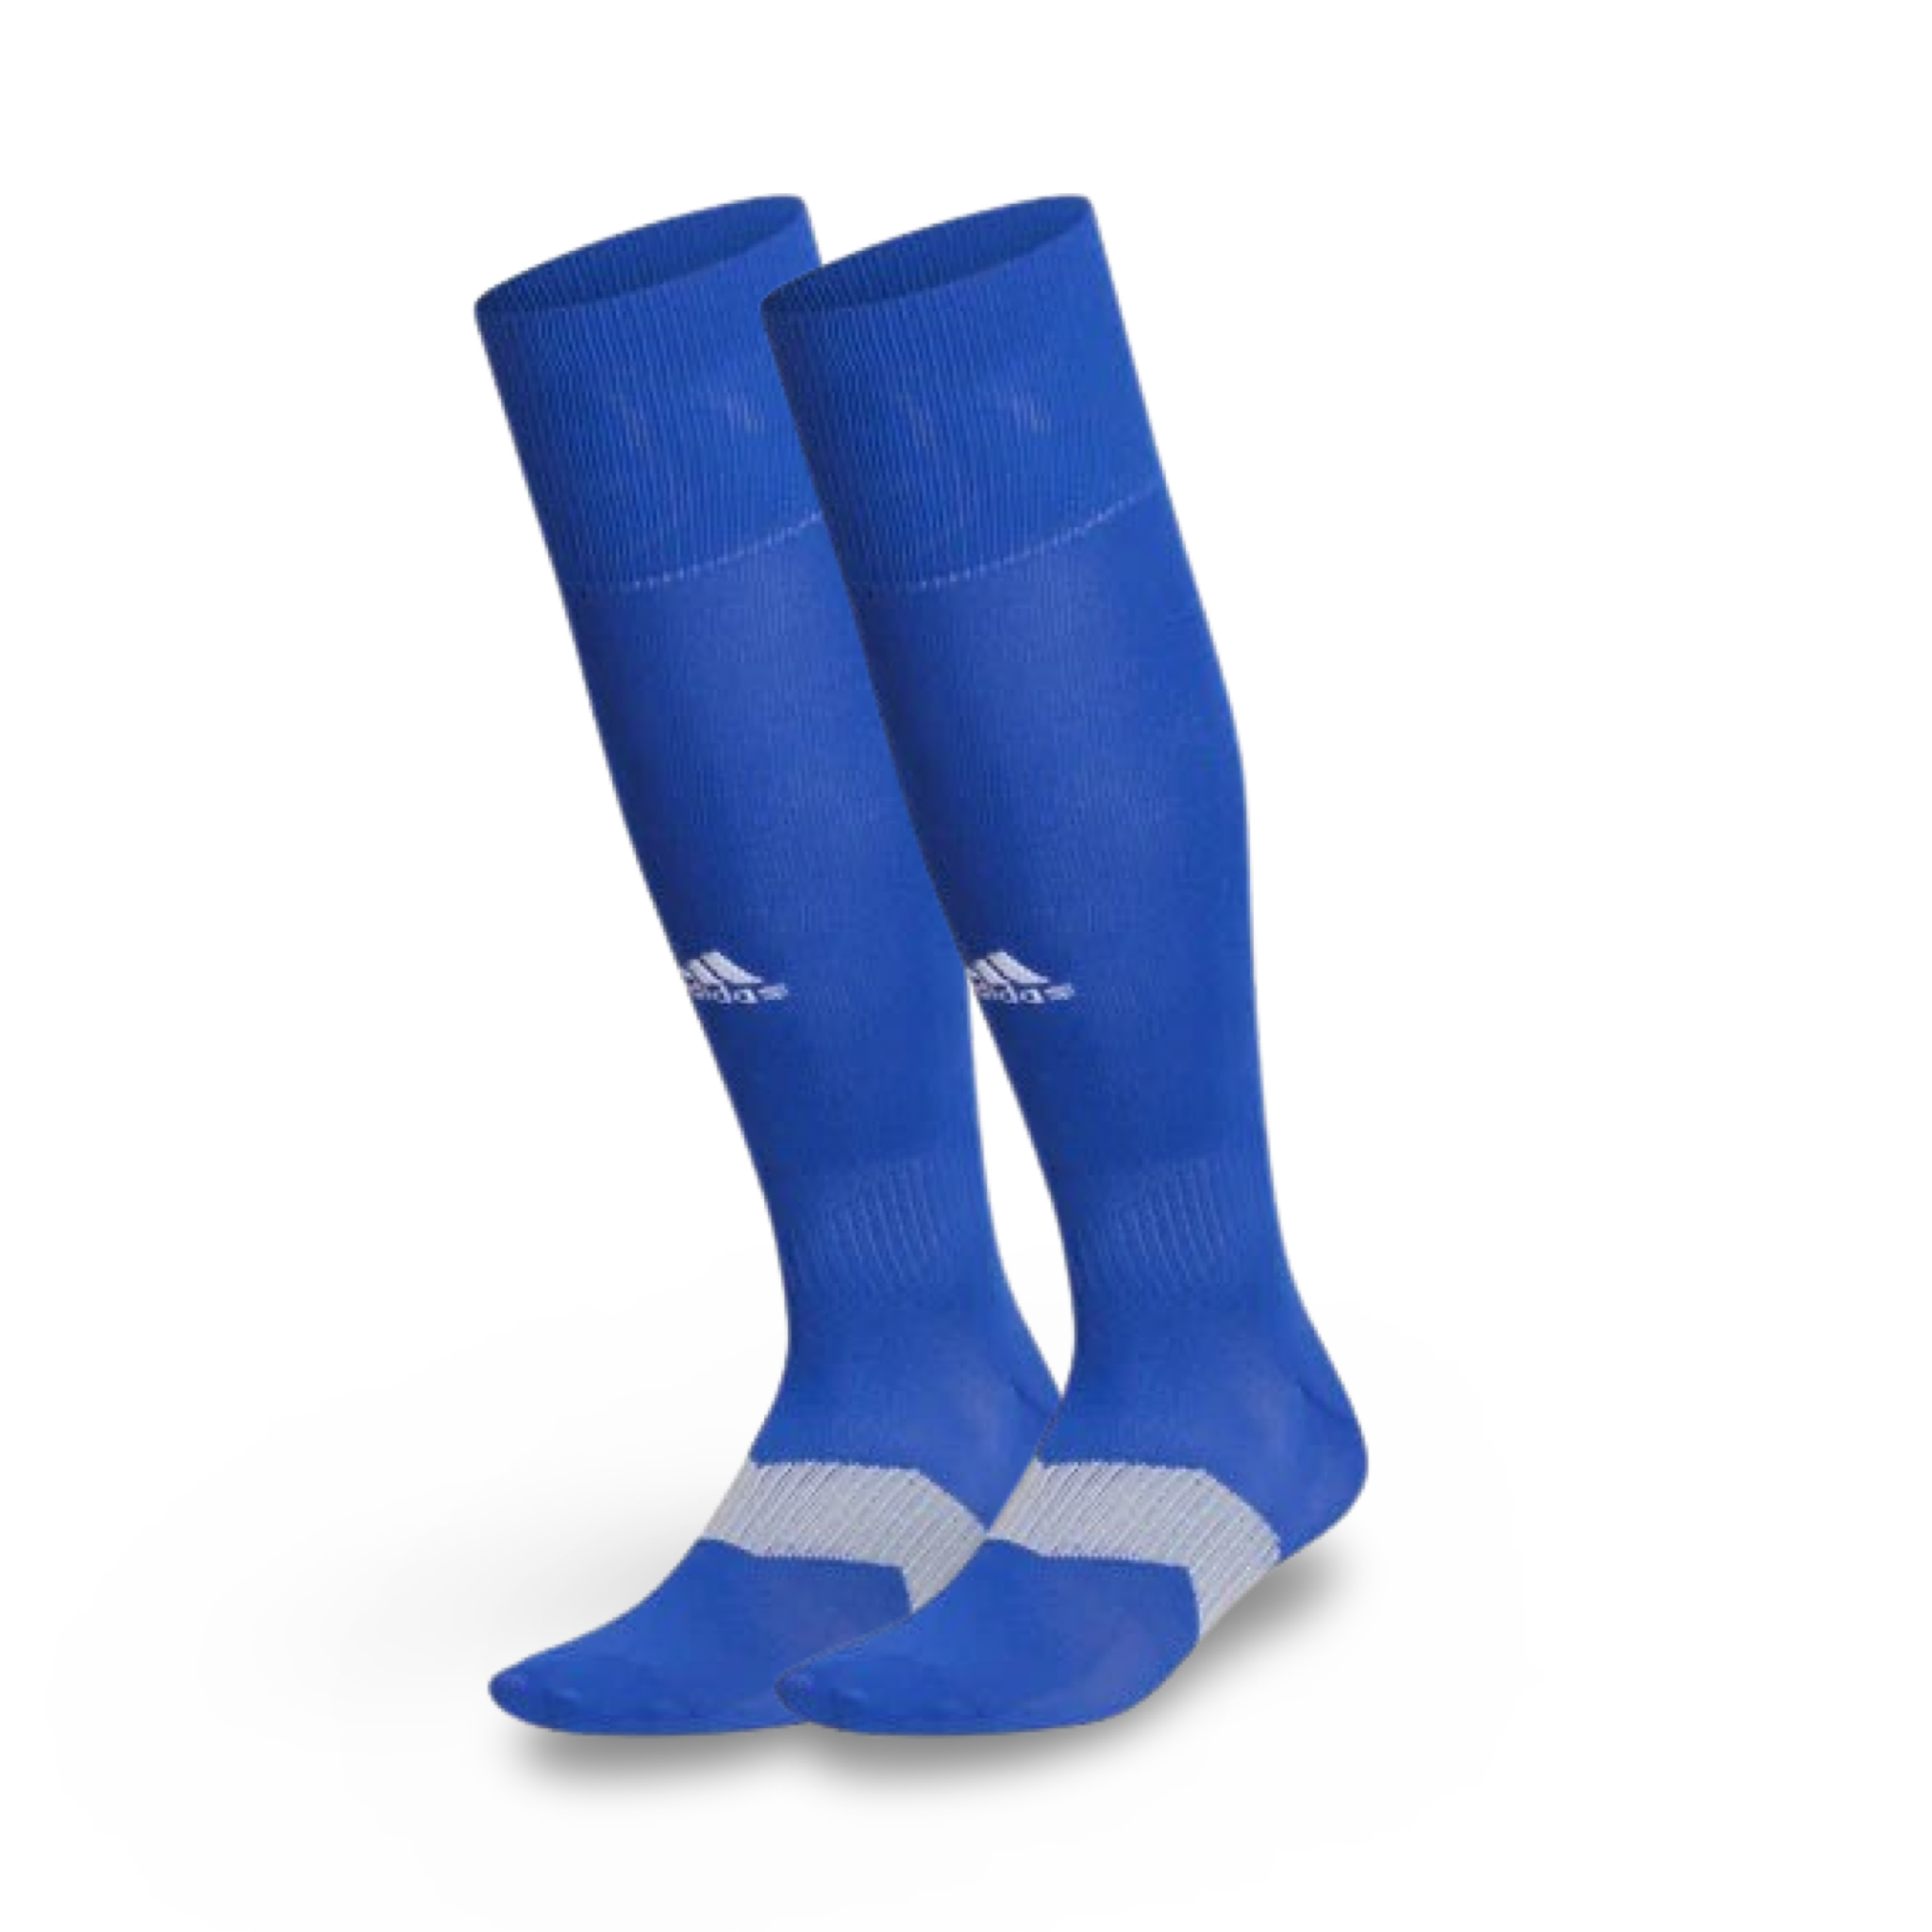 Adidas Metro V OTC Football Socks - Football Socks